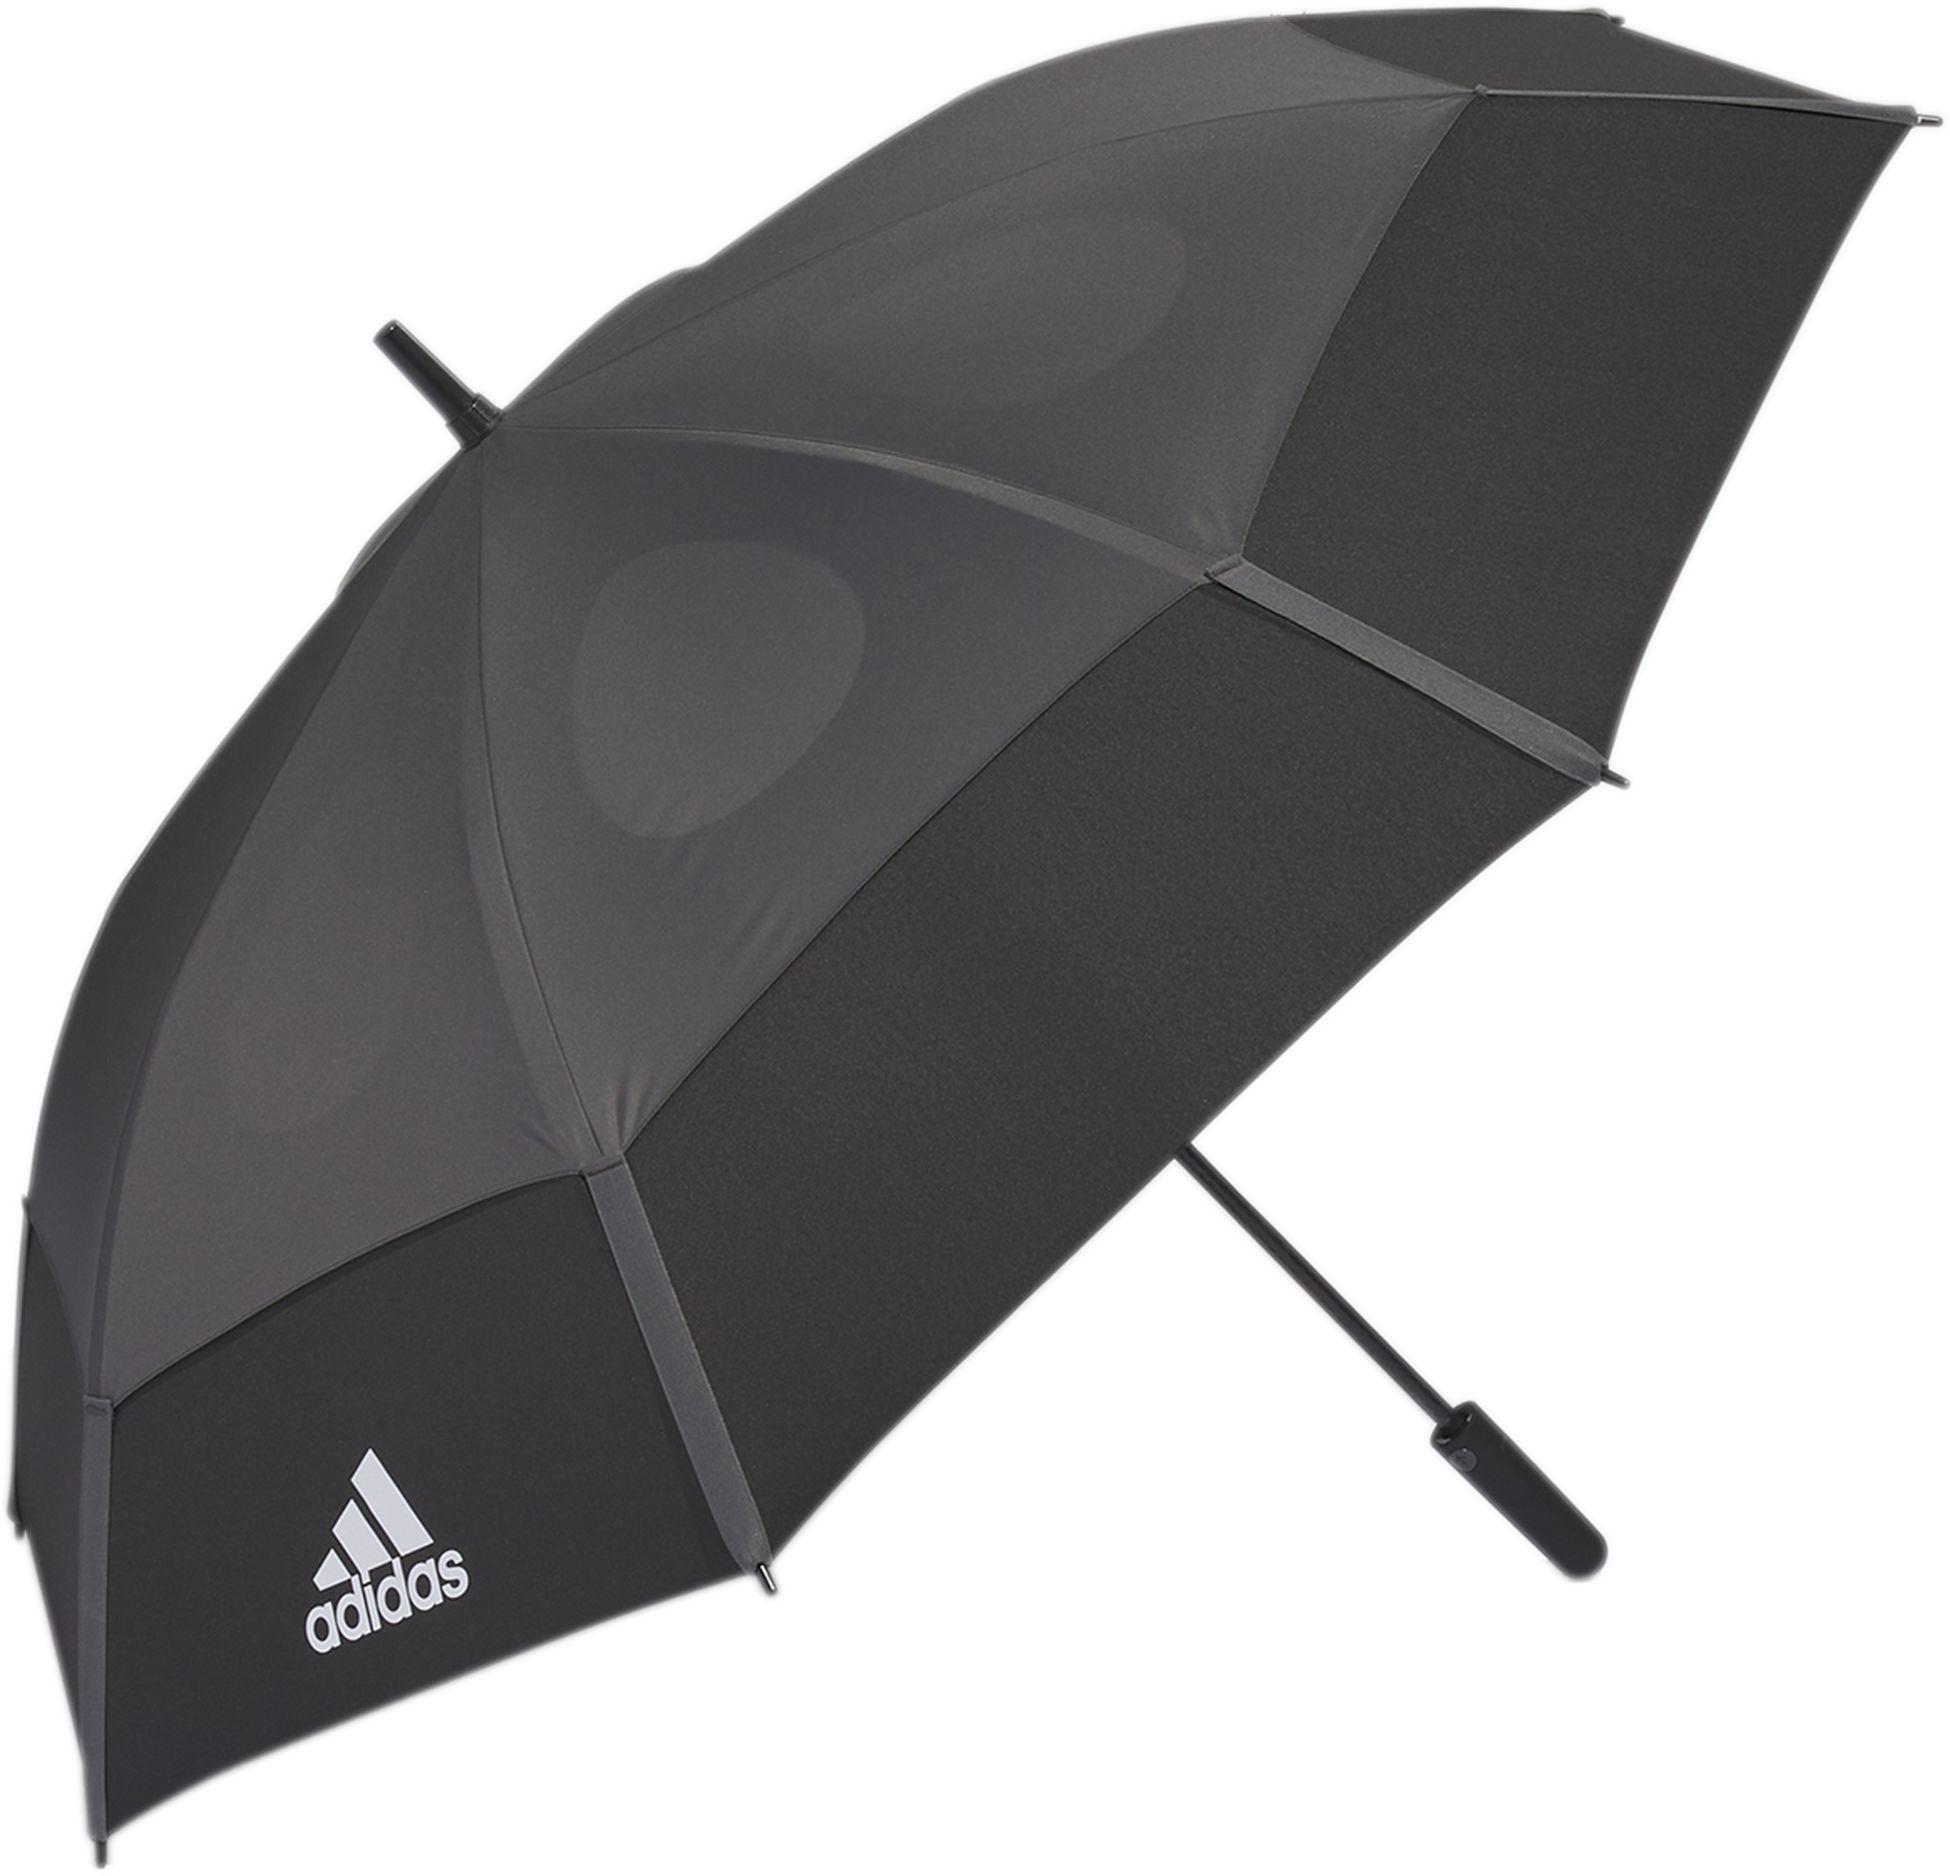 ADIDAS, Double Canopy Umbrella 64in